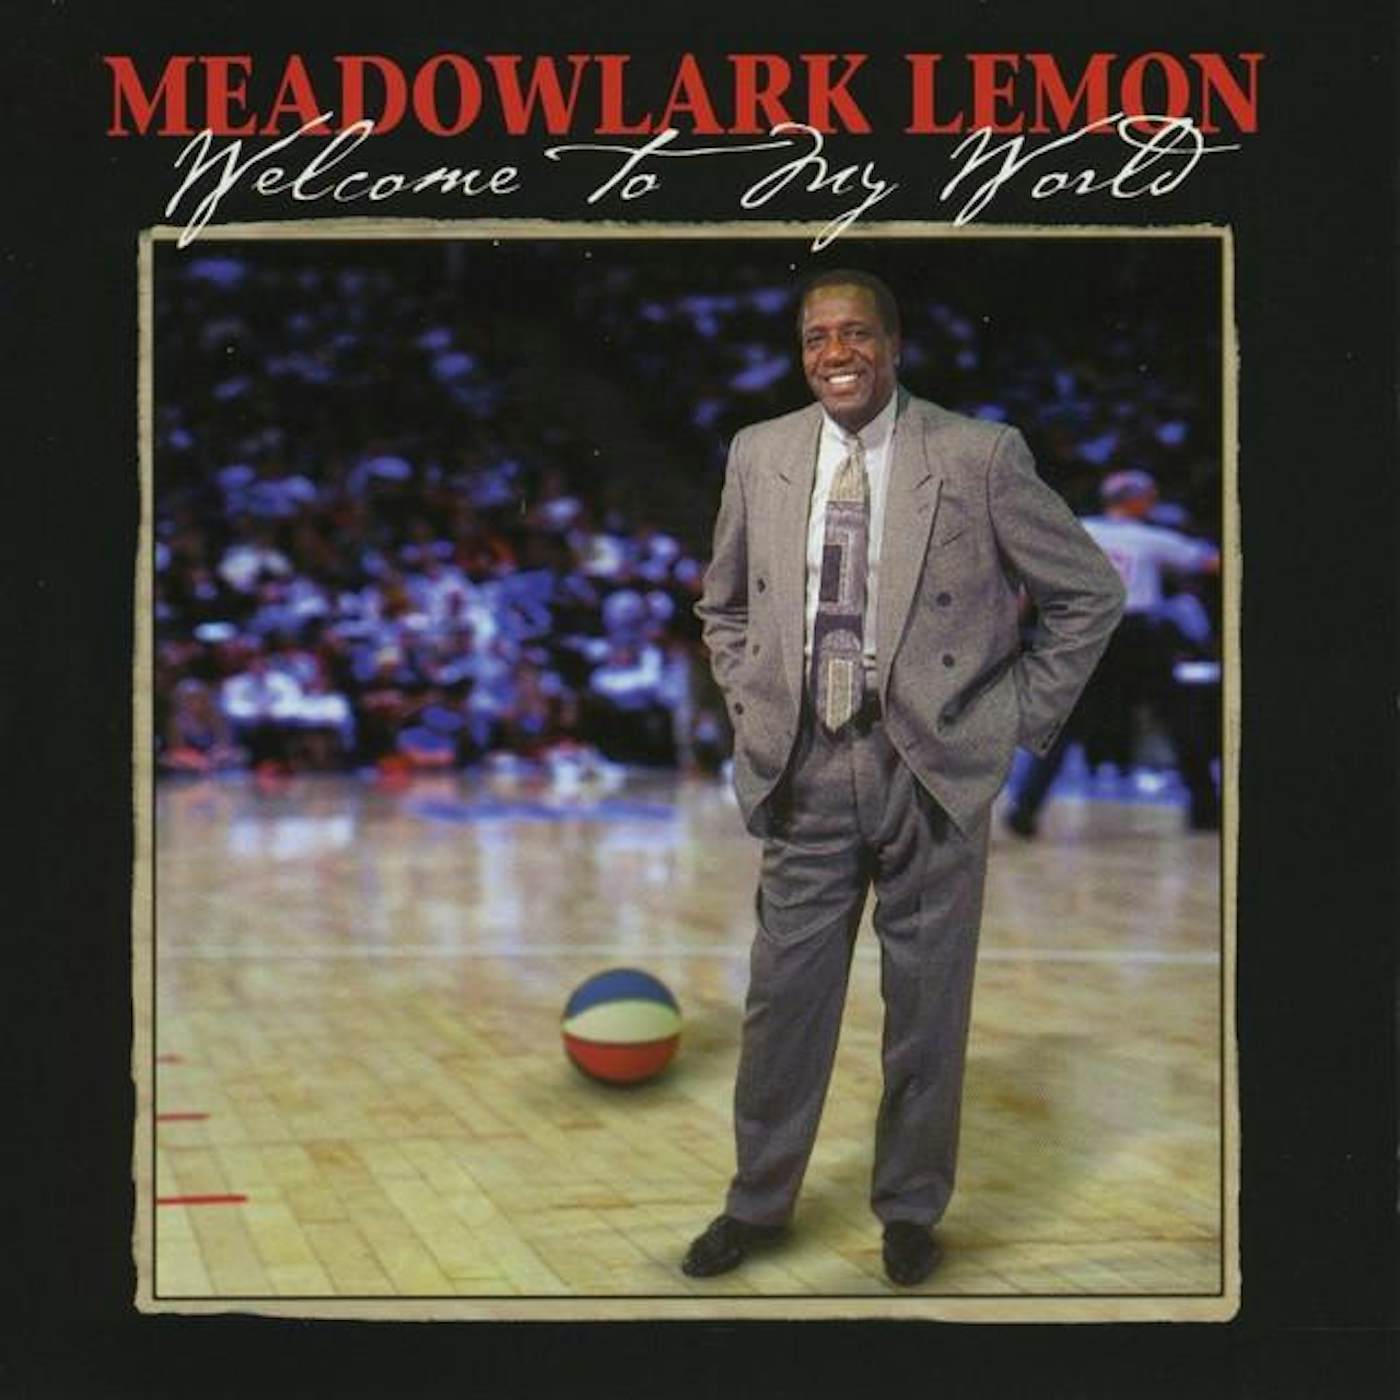 Meadowlark Lemon